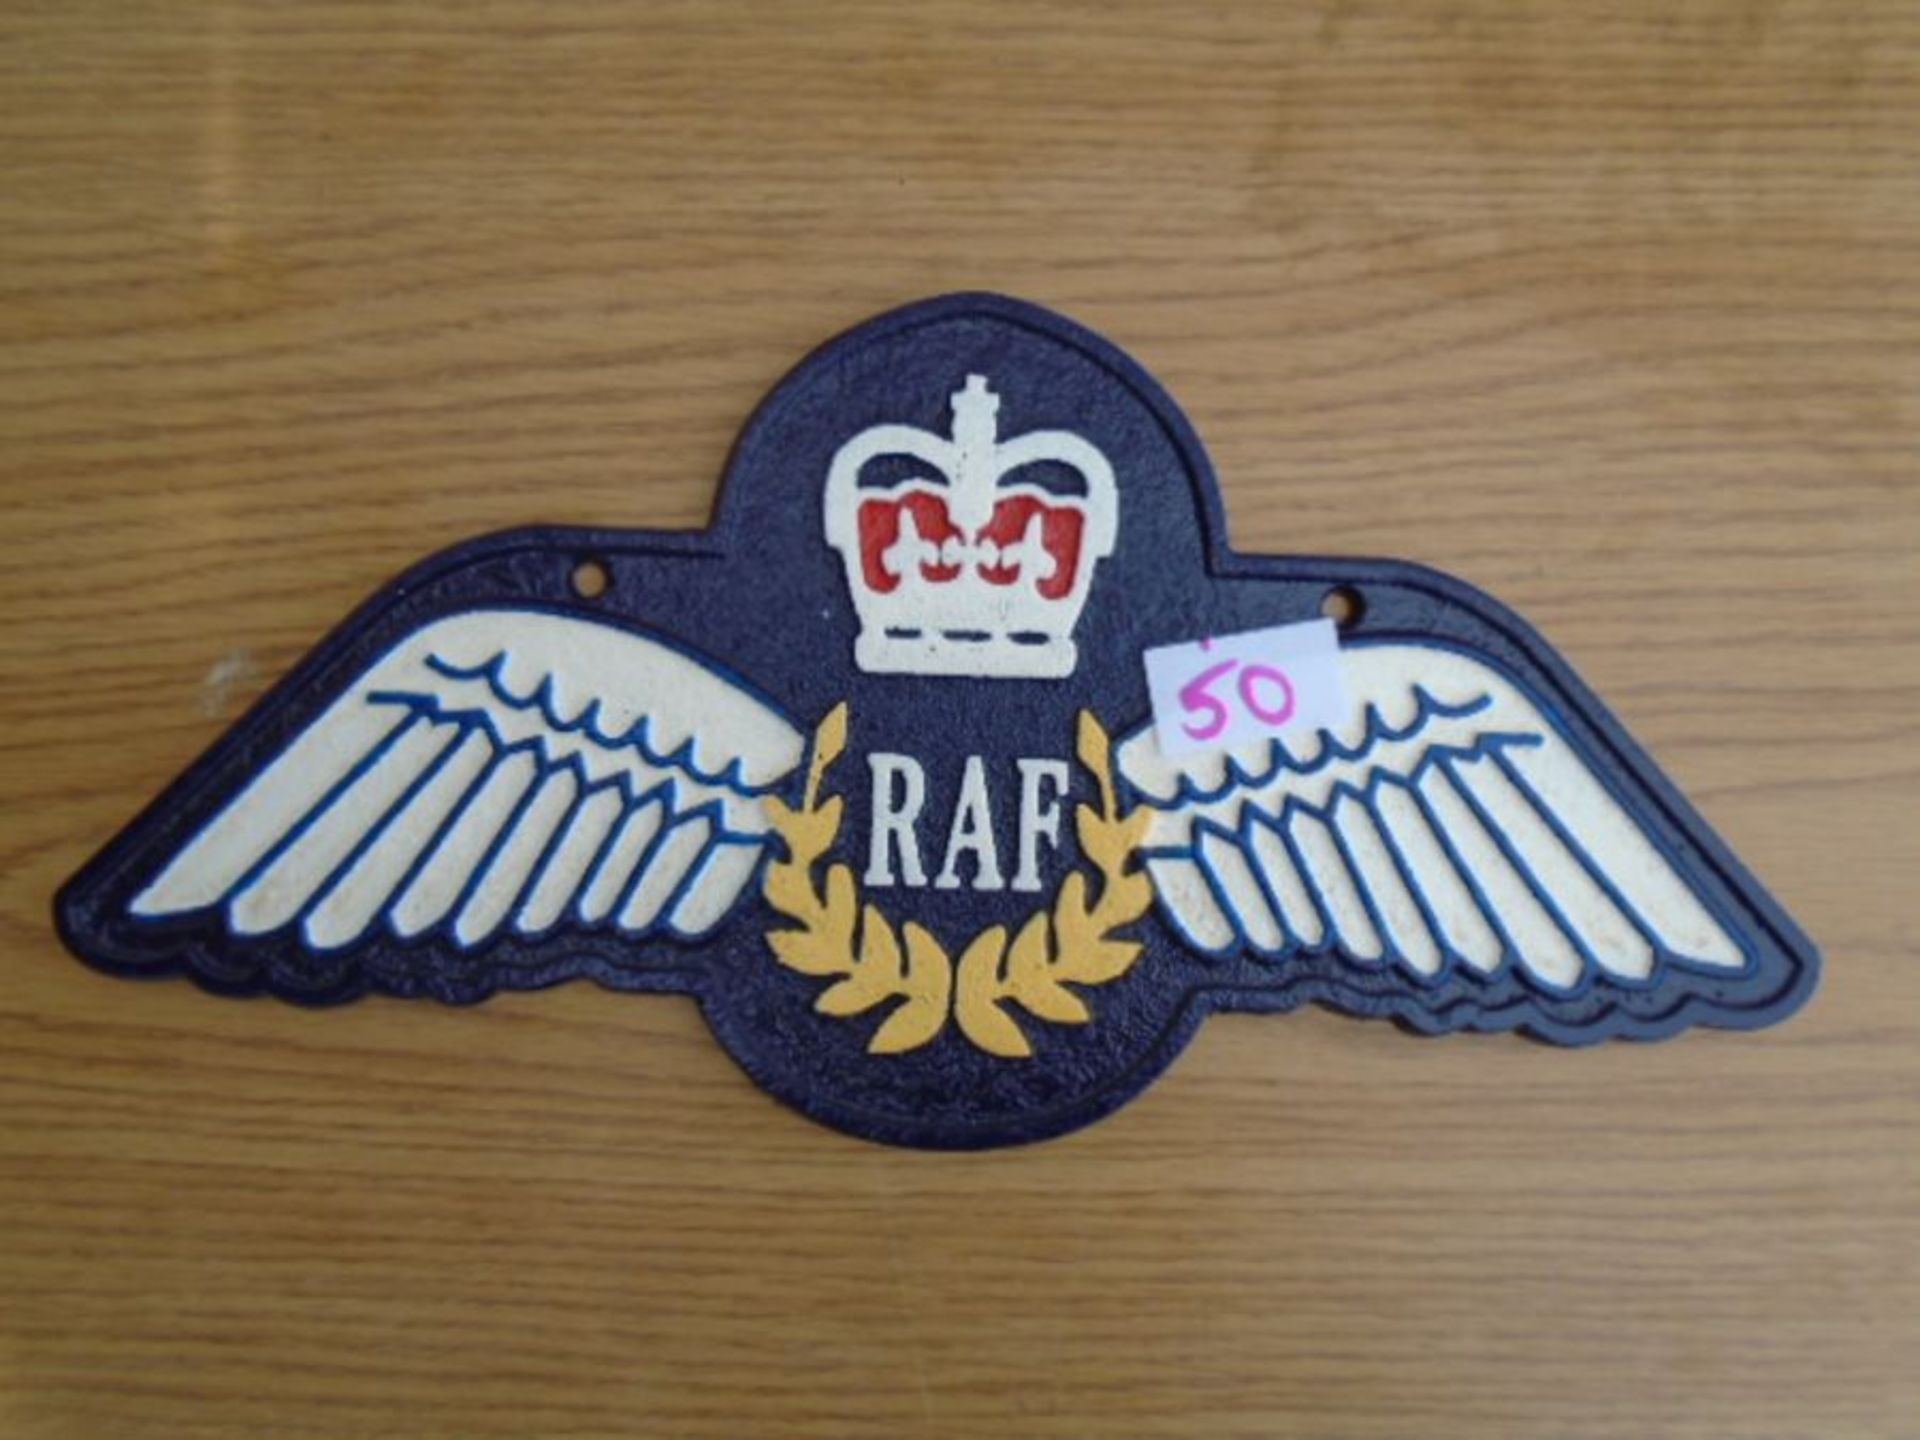 RAF wings plaque